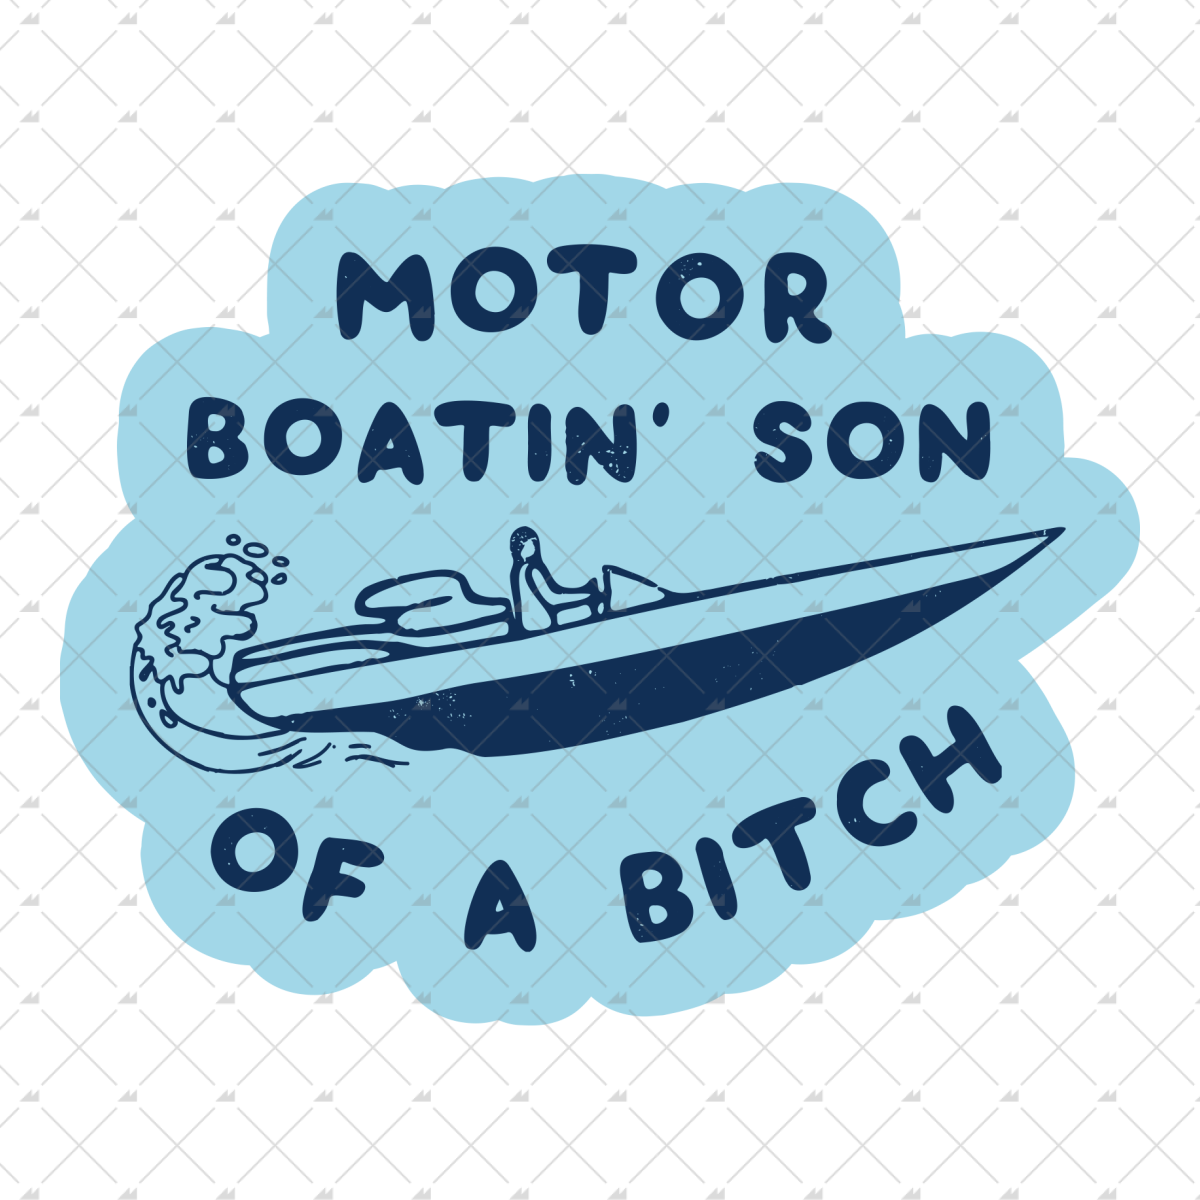 Motor Boatin' Son Of a Bitch - Sticker